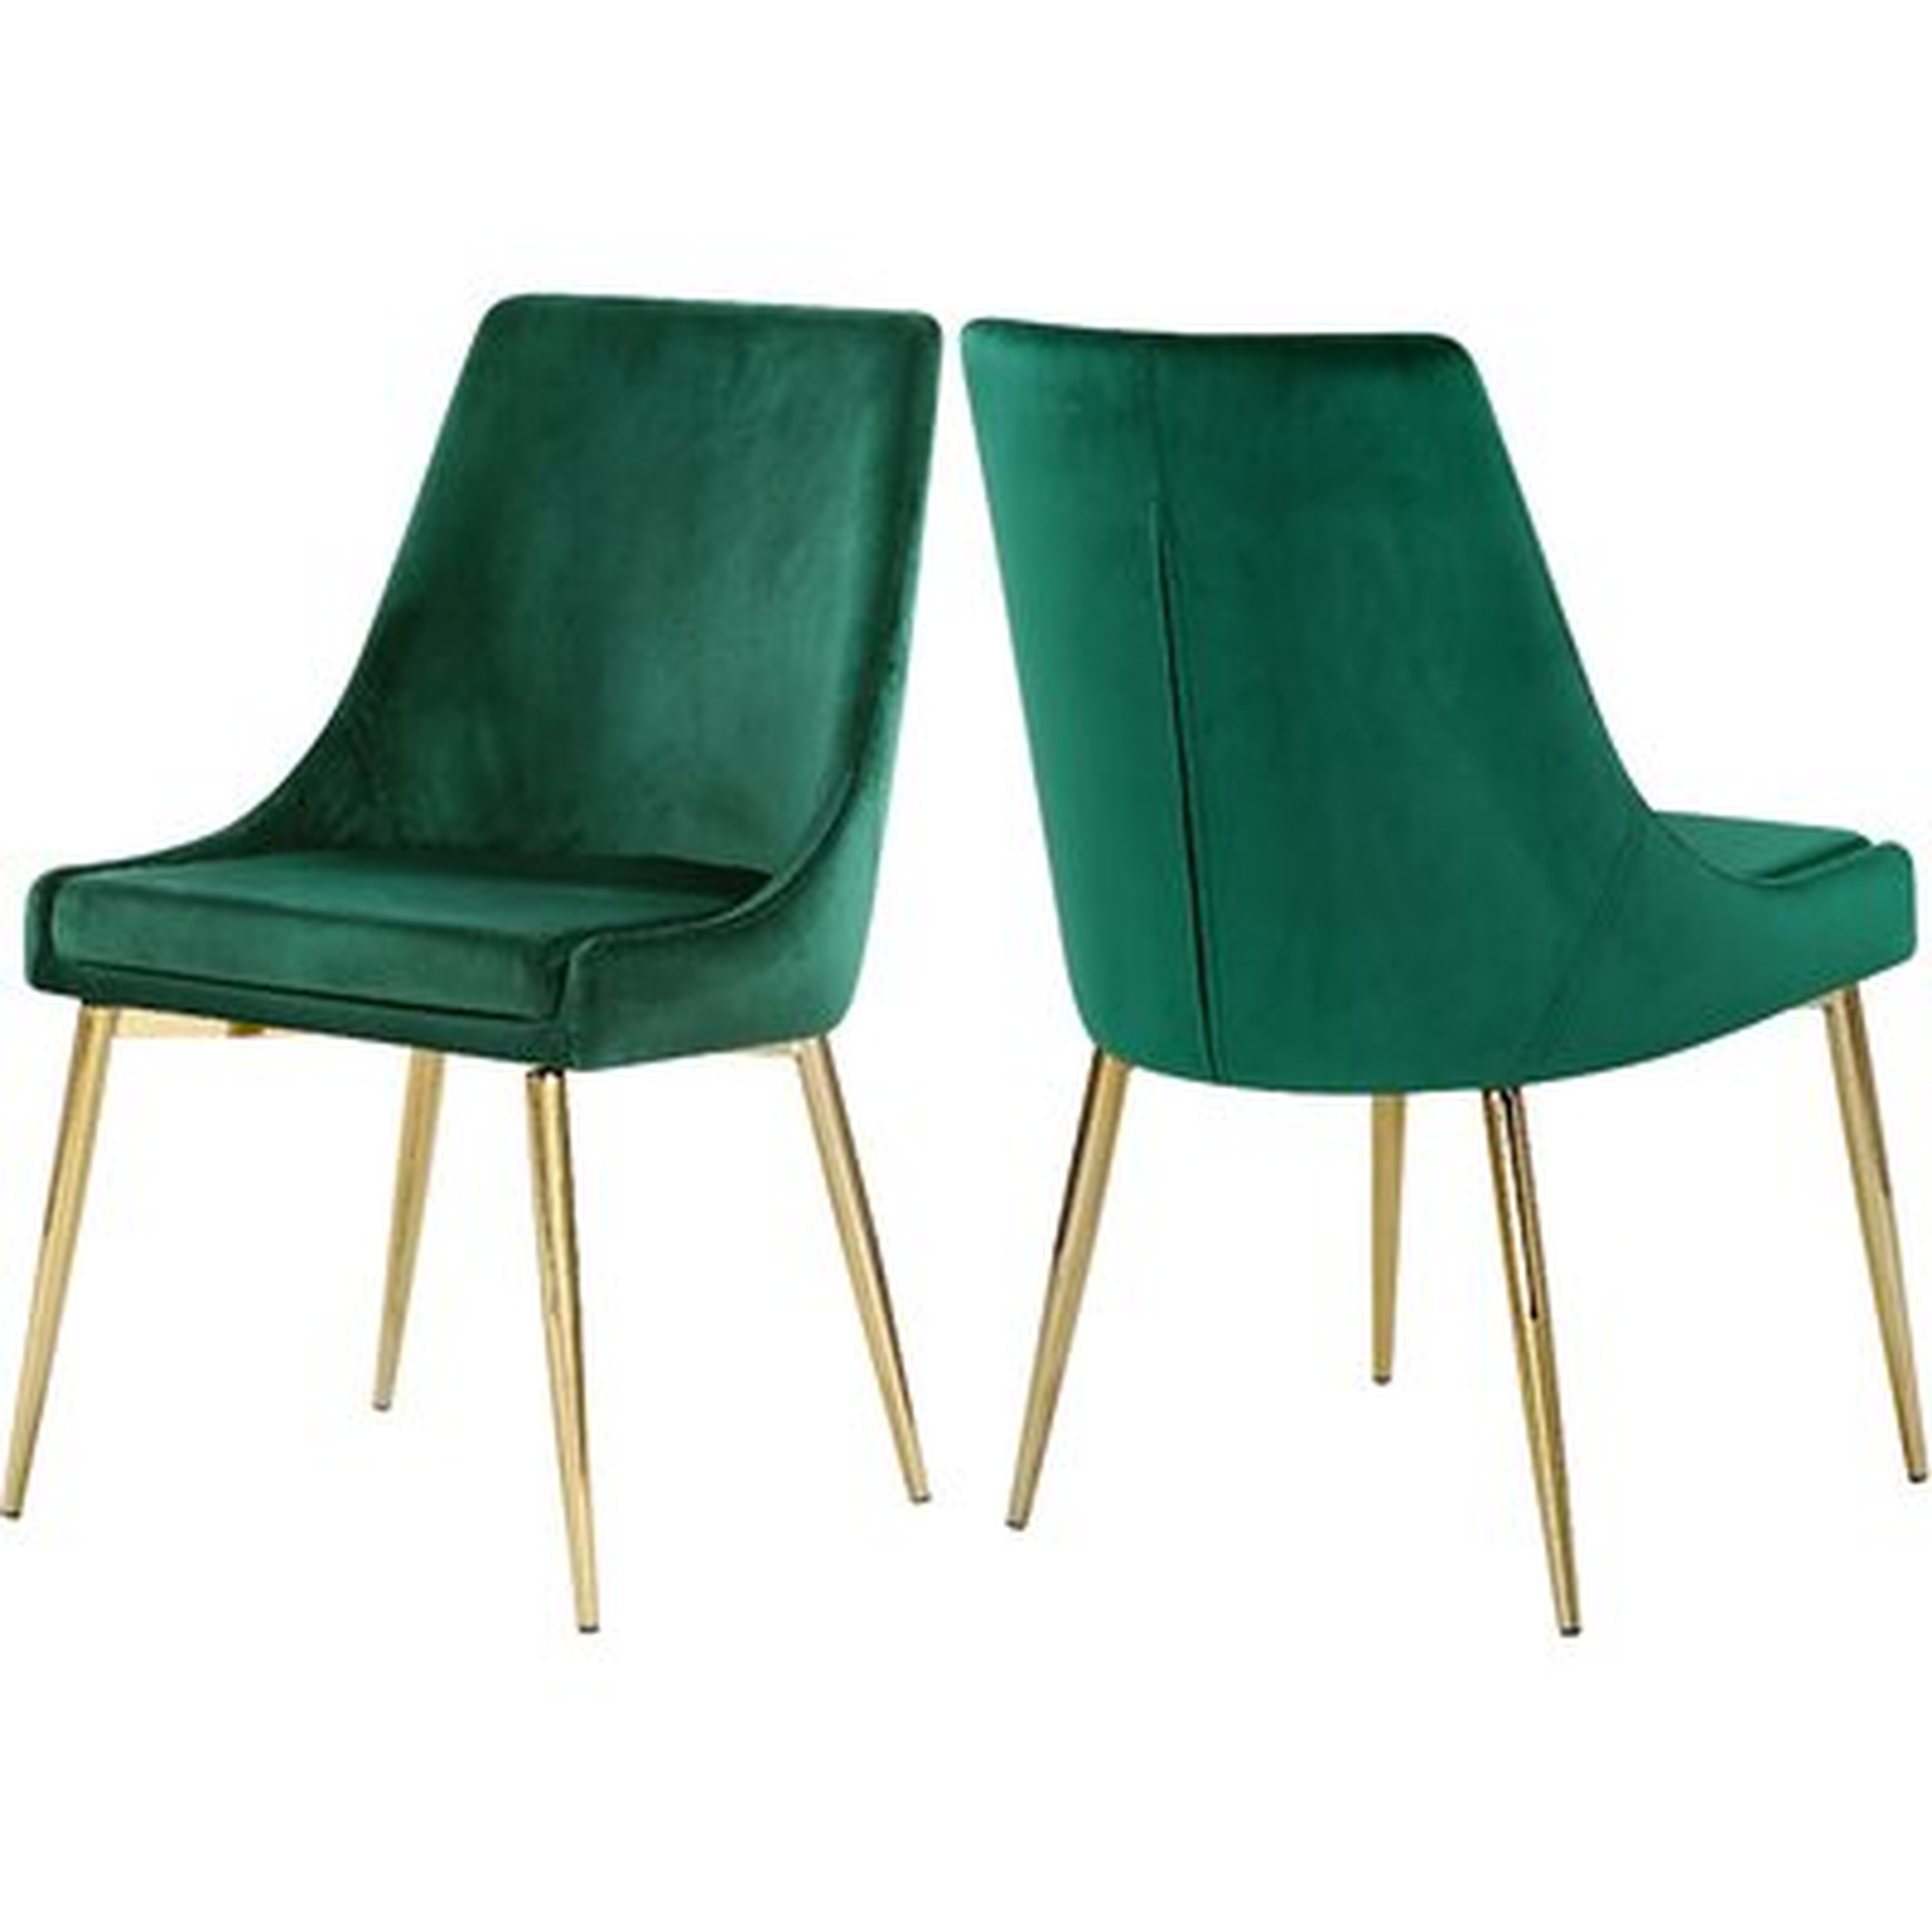 Karina Upholstered Dining Chair (set of 2) - Wayfair